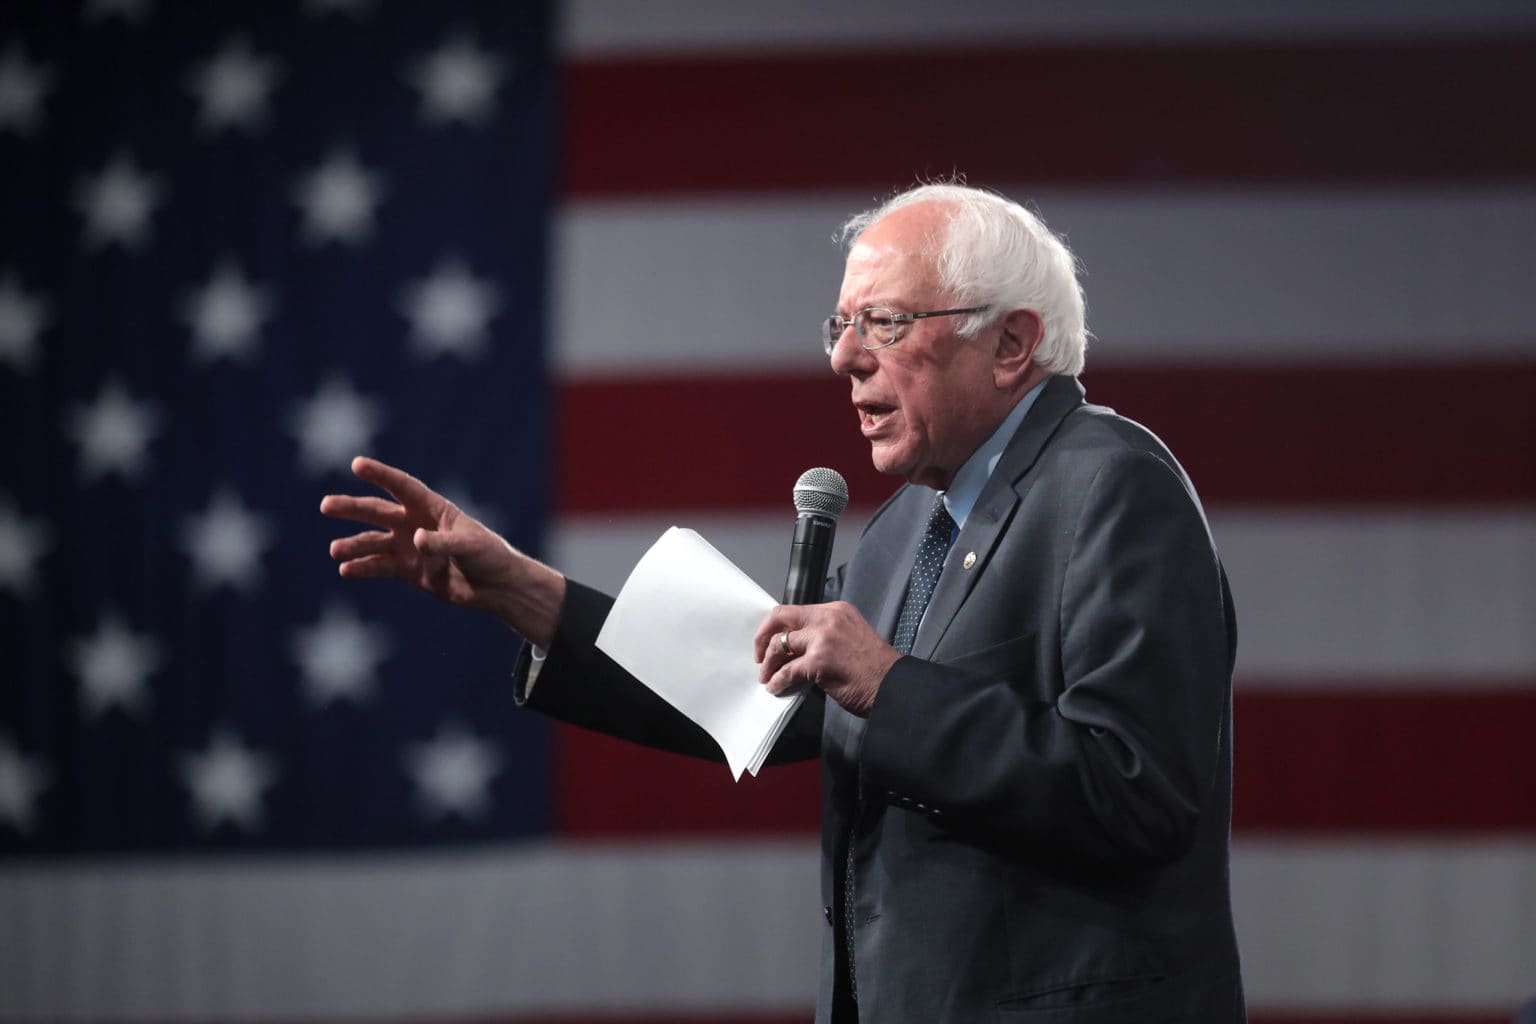 Presidential candidate Sen. Bernie Sanders speaks at an event in Des Moines, Iowa.